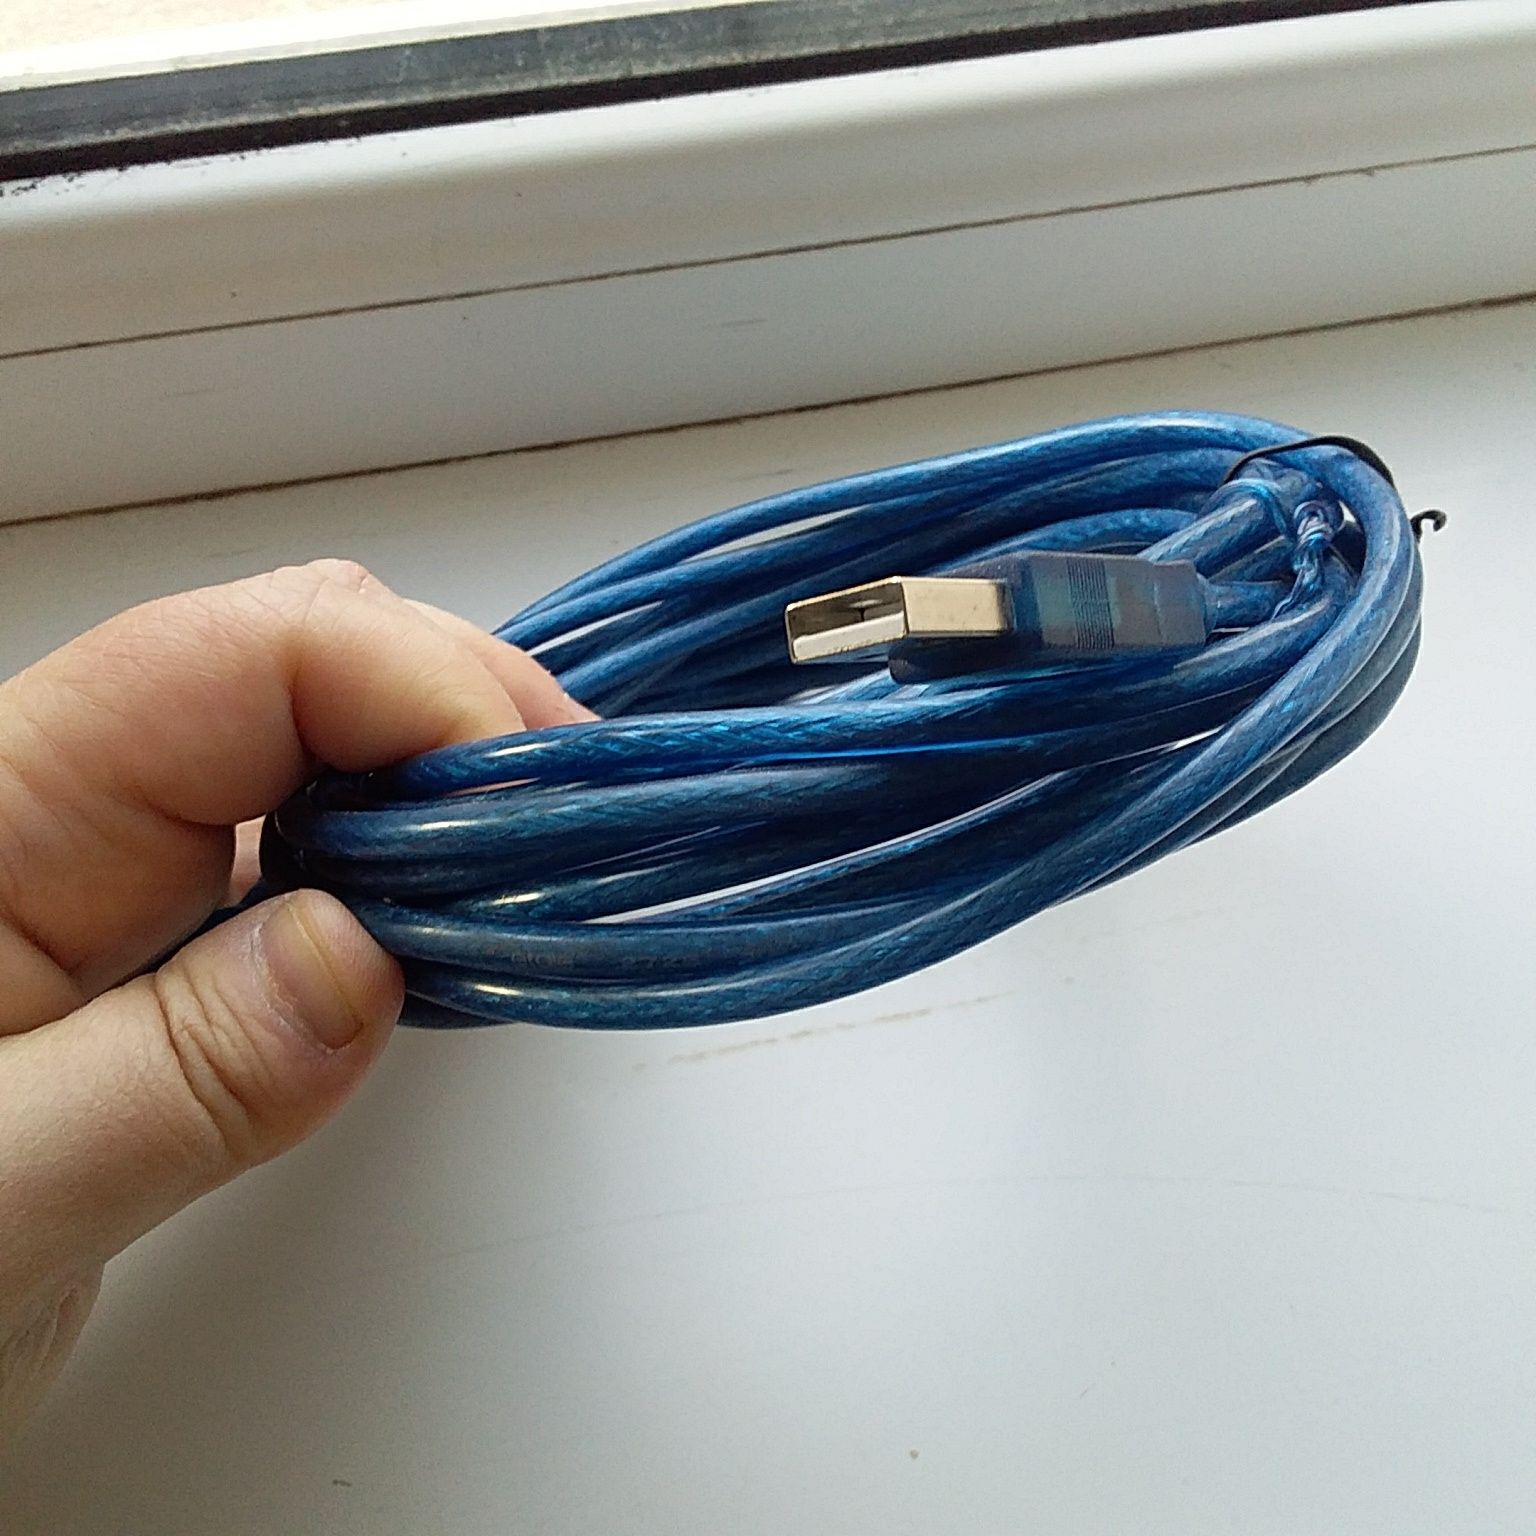 USB uzaytpa kabel (5 metr)